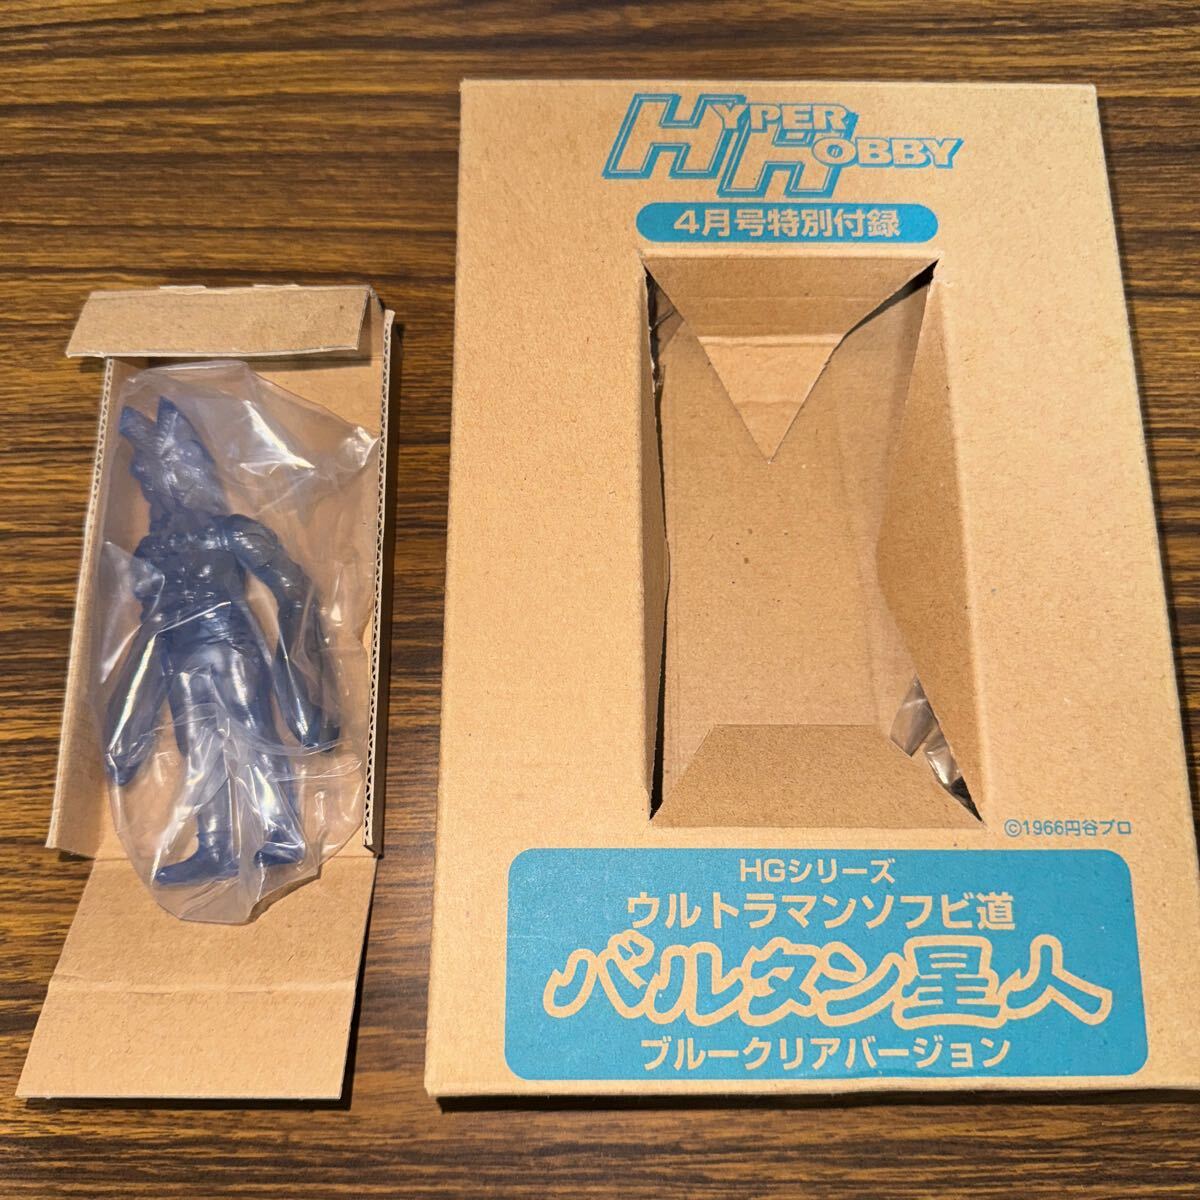 HG серии Ultraman sofvi дорога Baltan Seijin голубой прозрачный гипер- хобби фигурка 